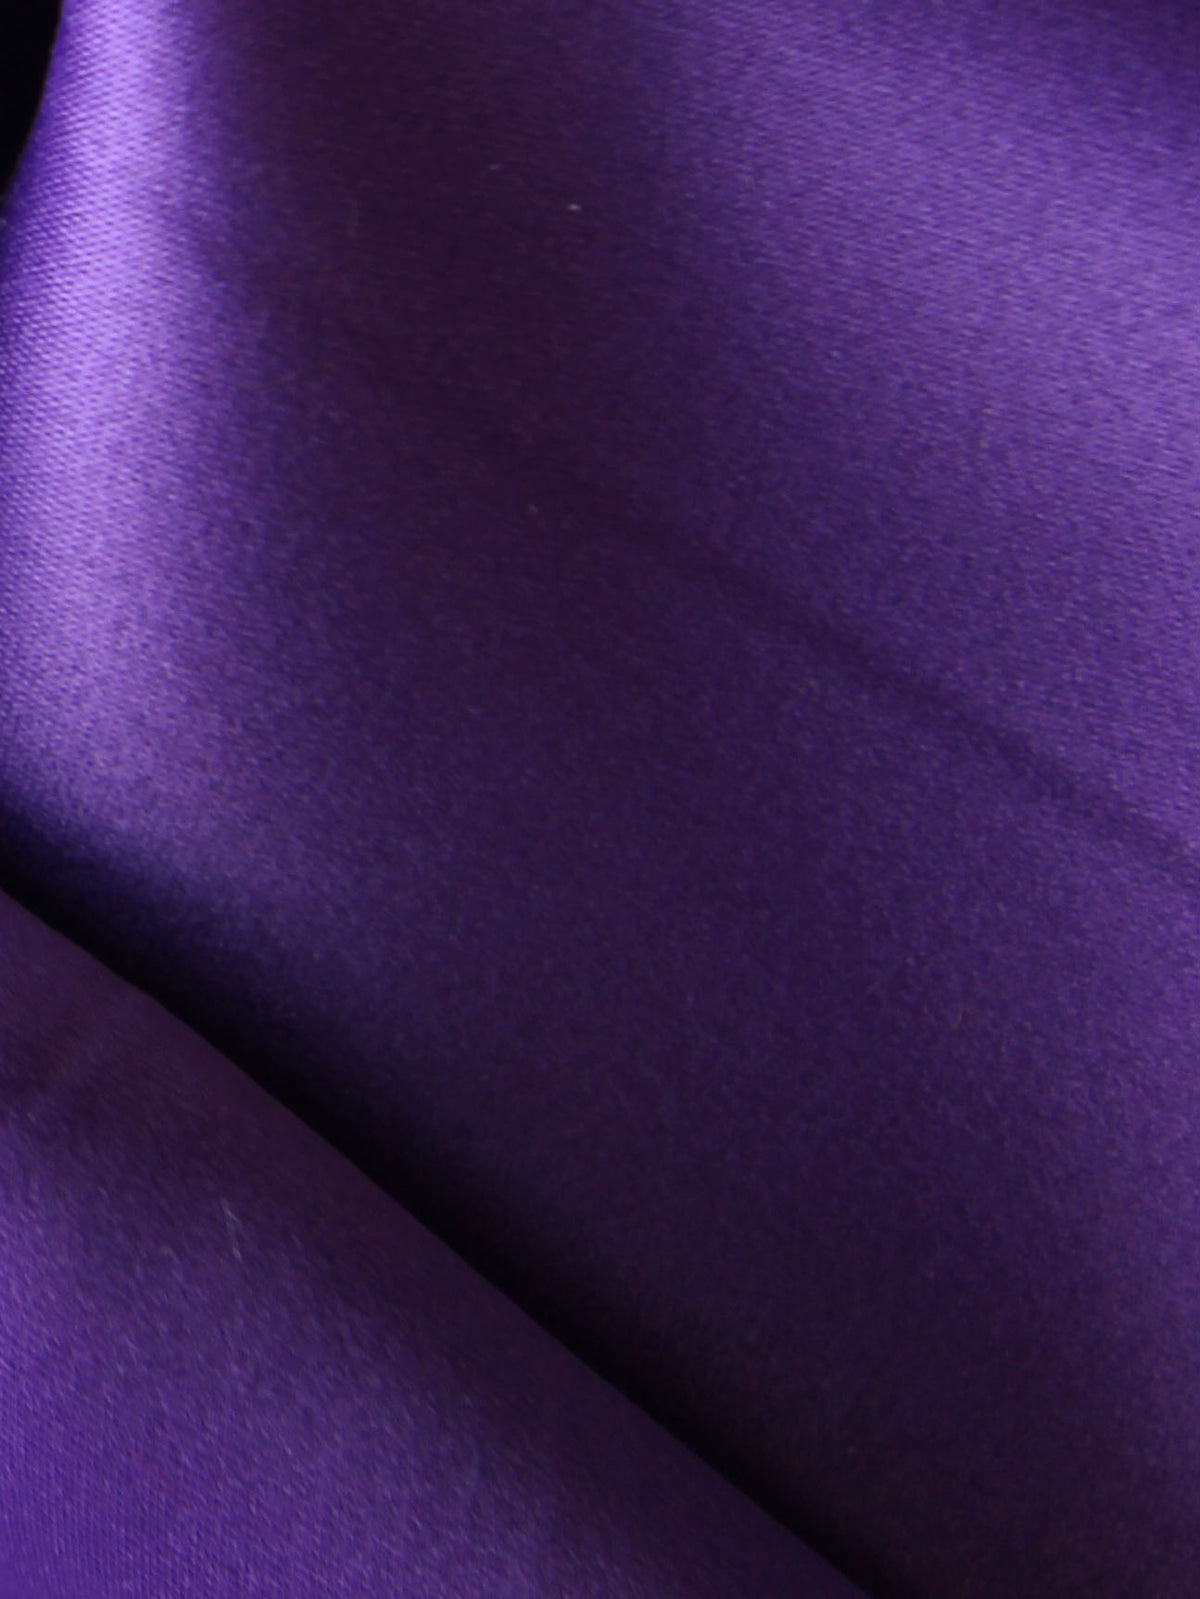 Purple Silk Satin - Magnifique